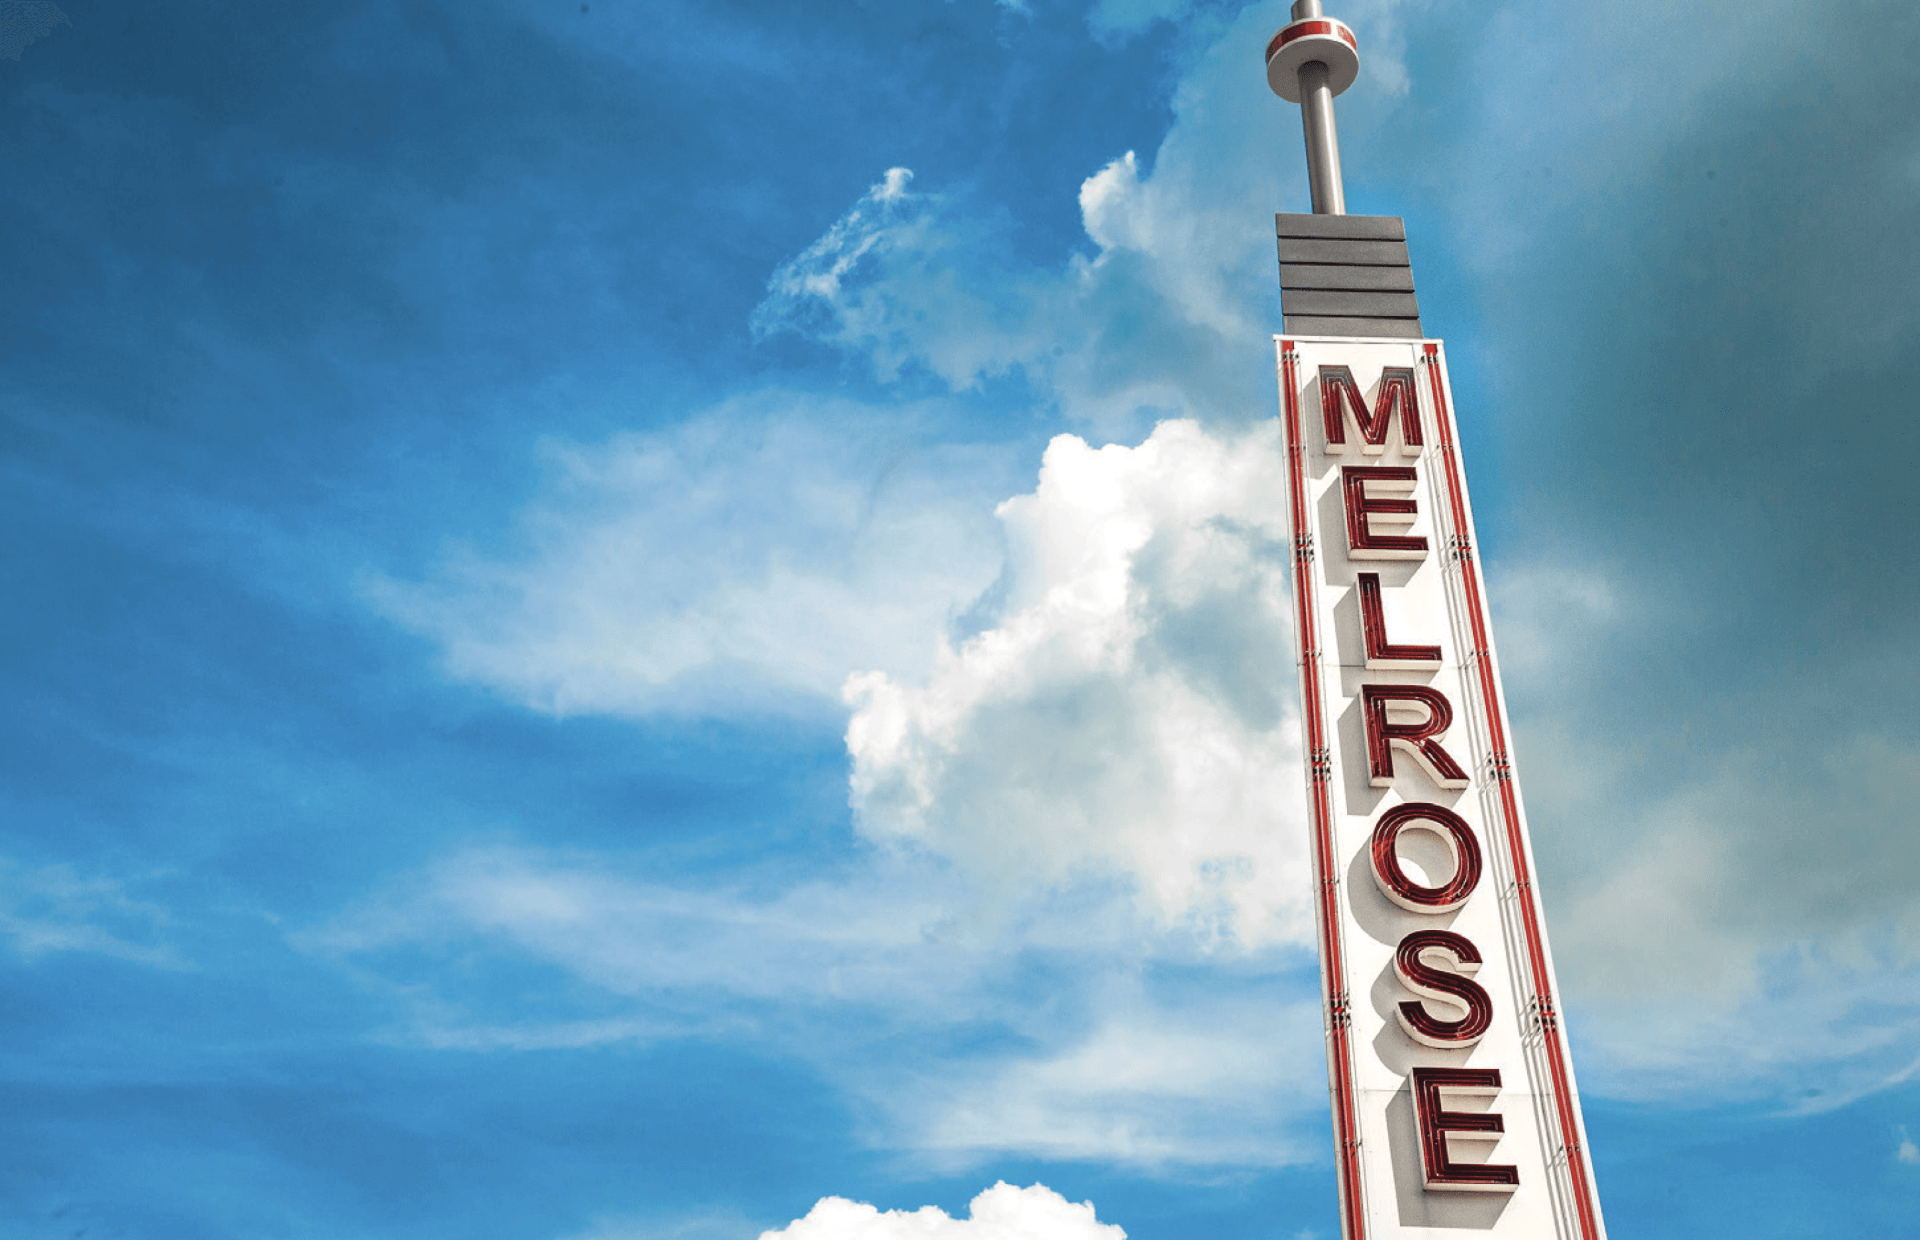 Melrose neon sign in Nashville Tennessee